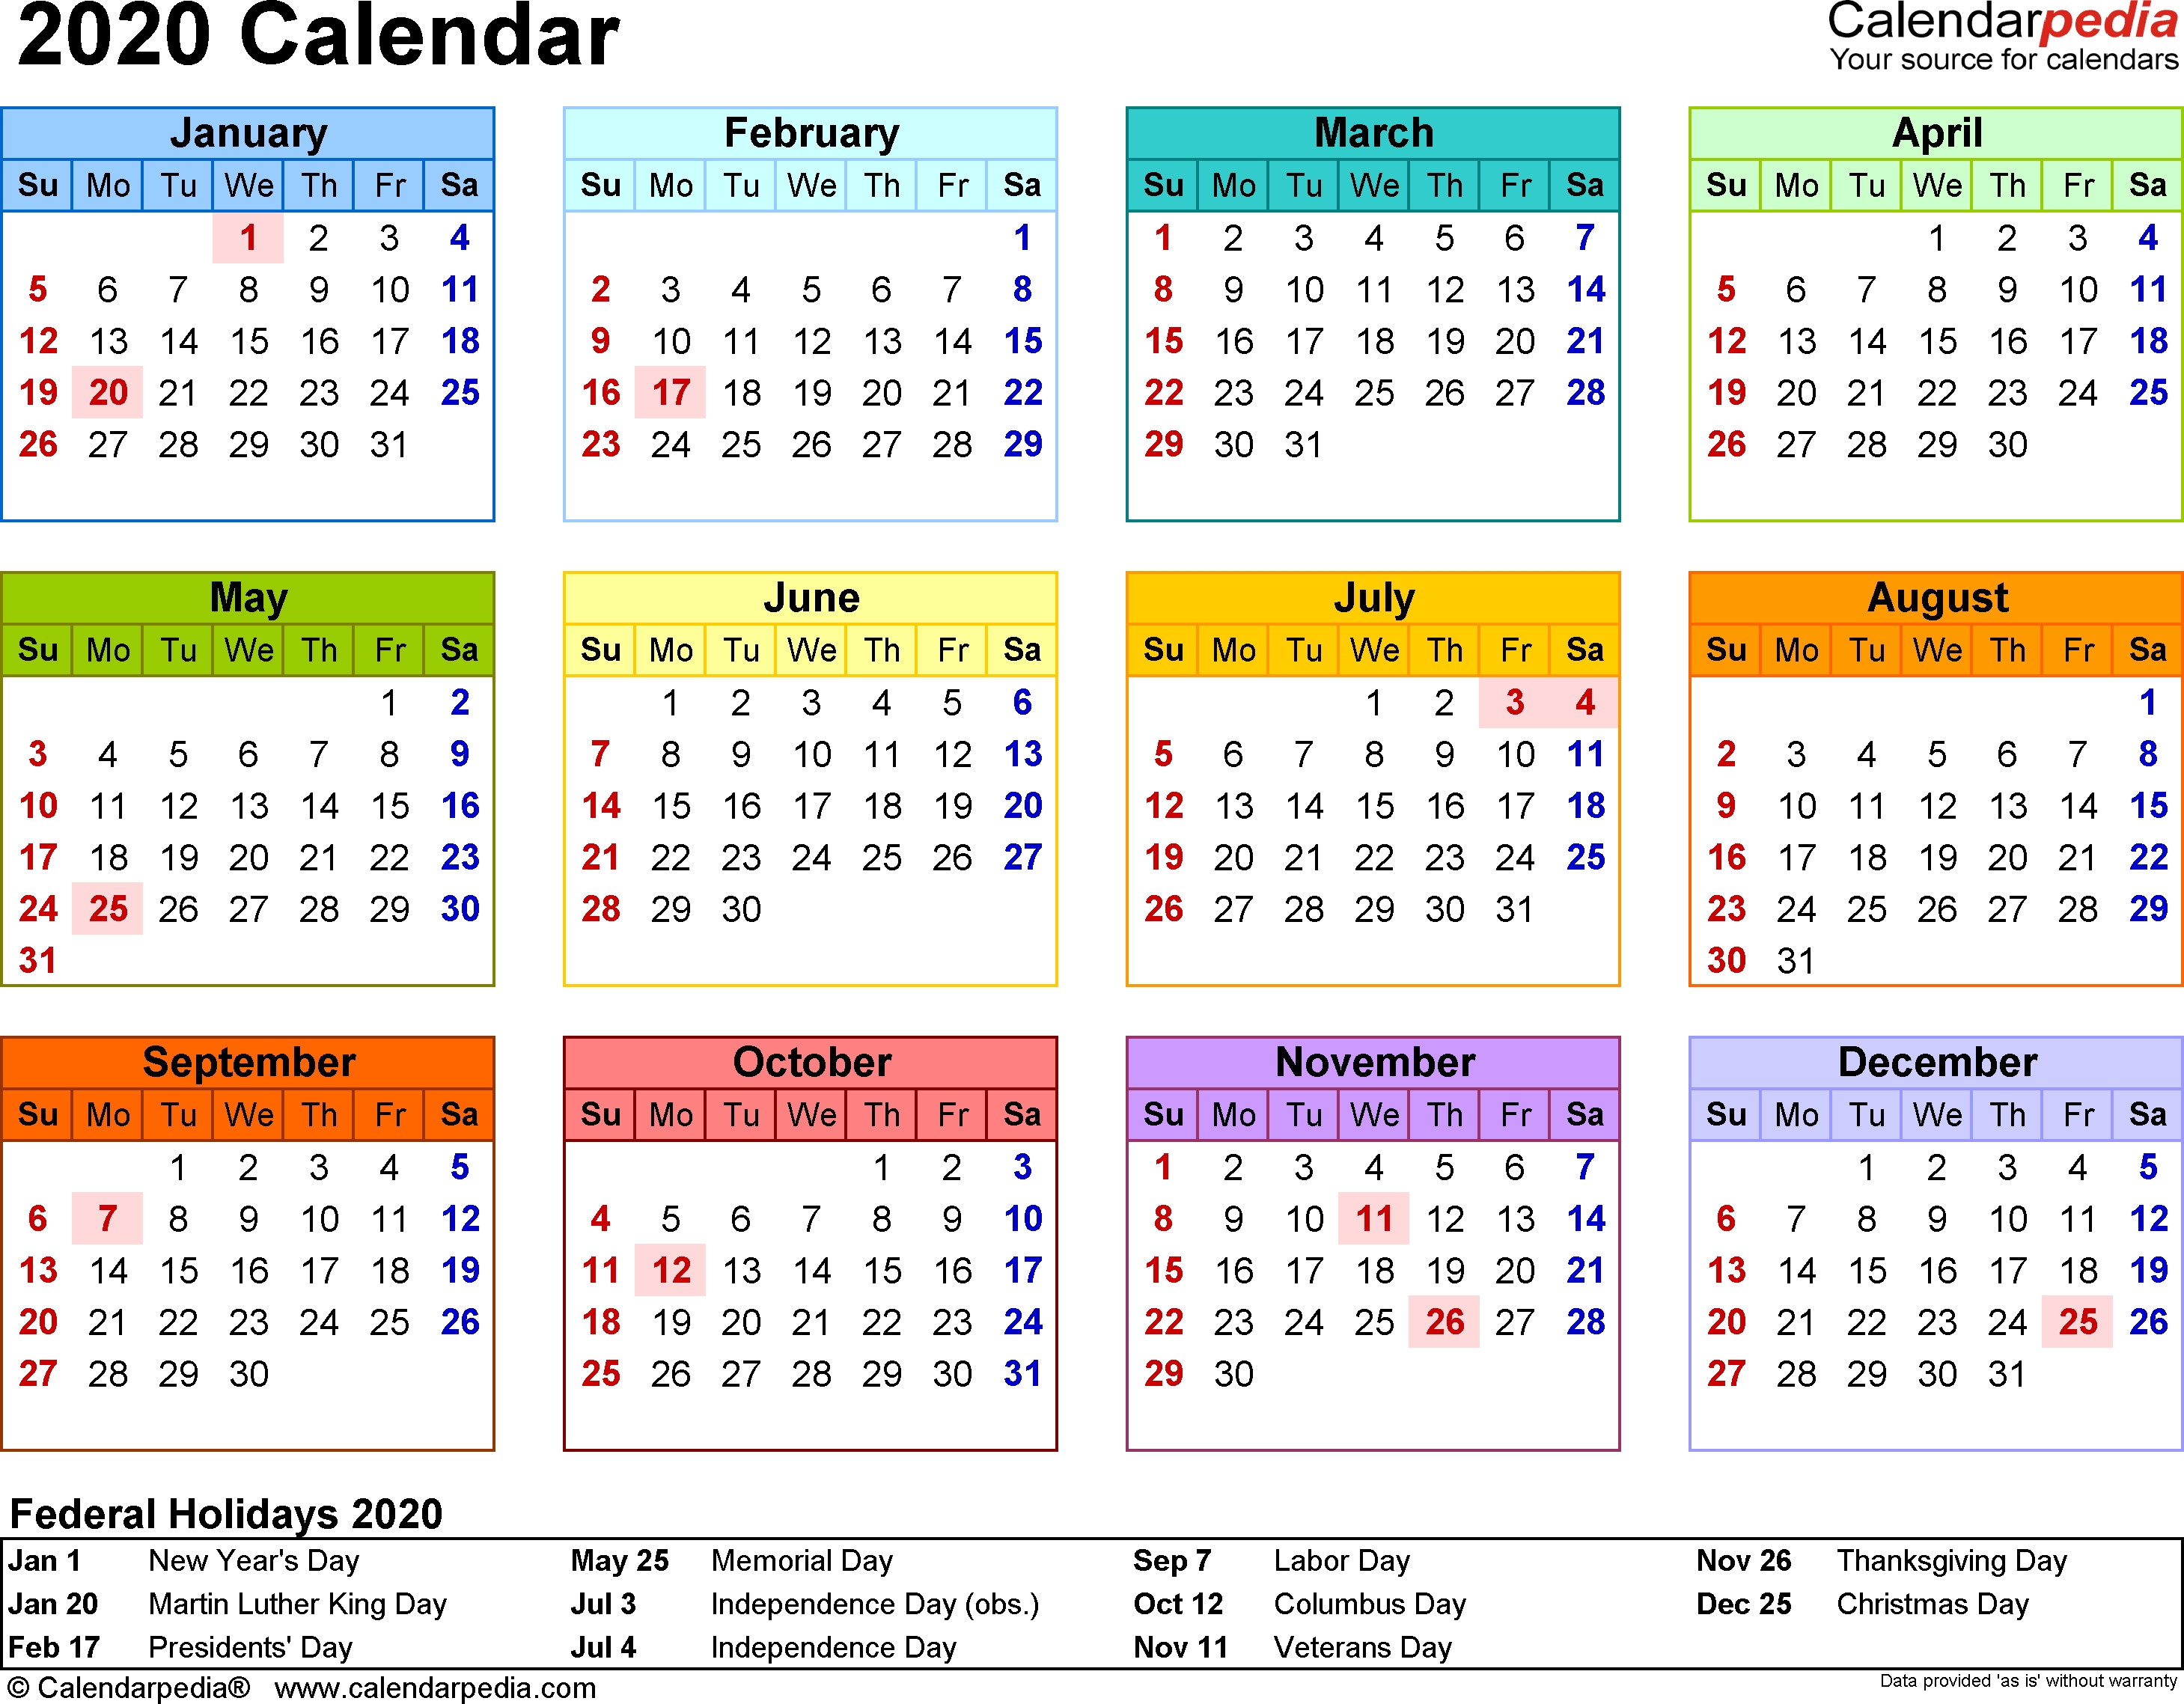 2020 Calendar Pdf - 17 Free Printable Calendar Templates 2020 Holiday Calendar Philippines